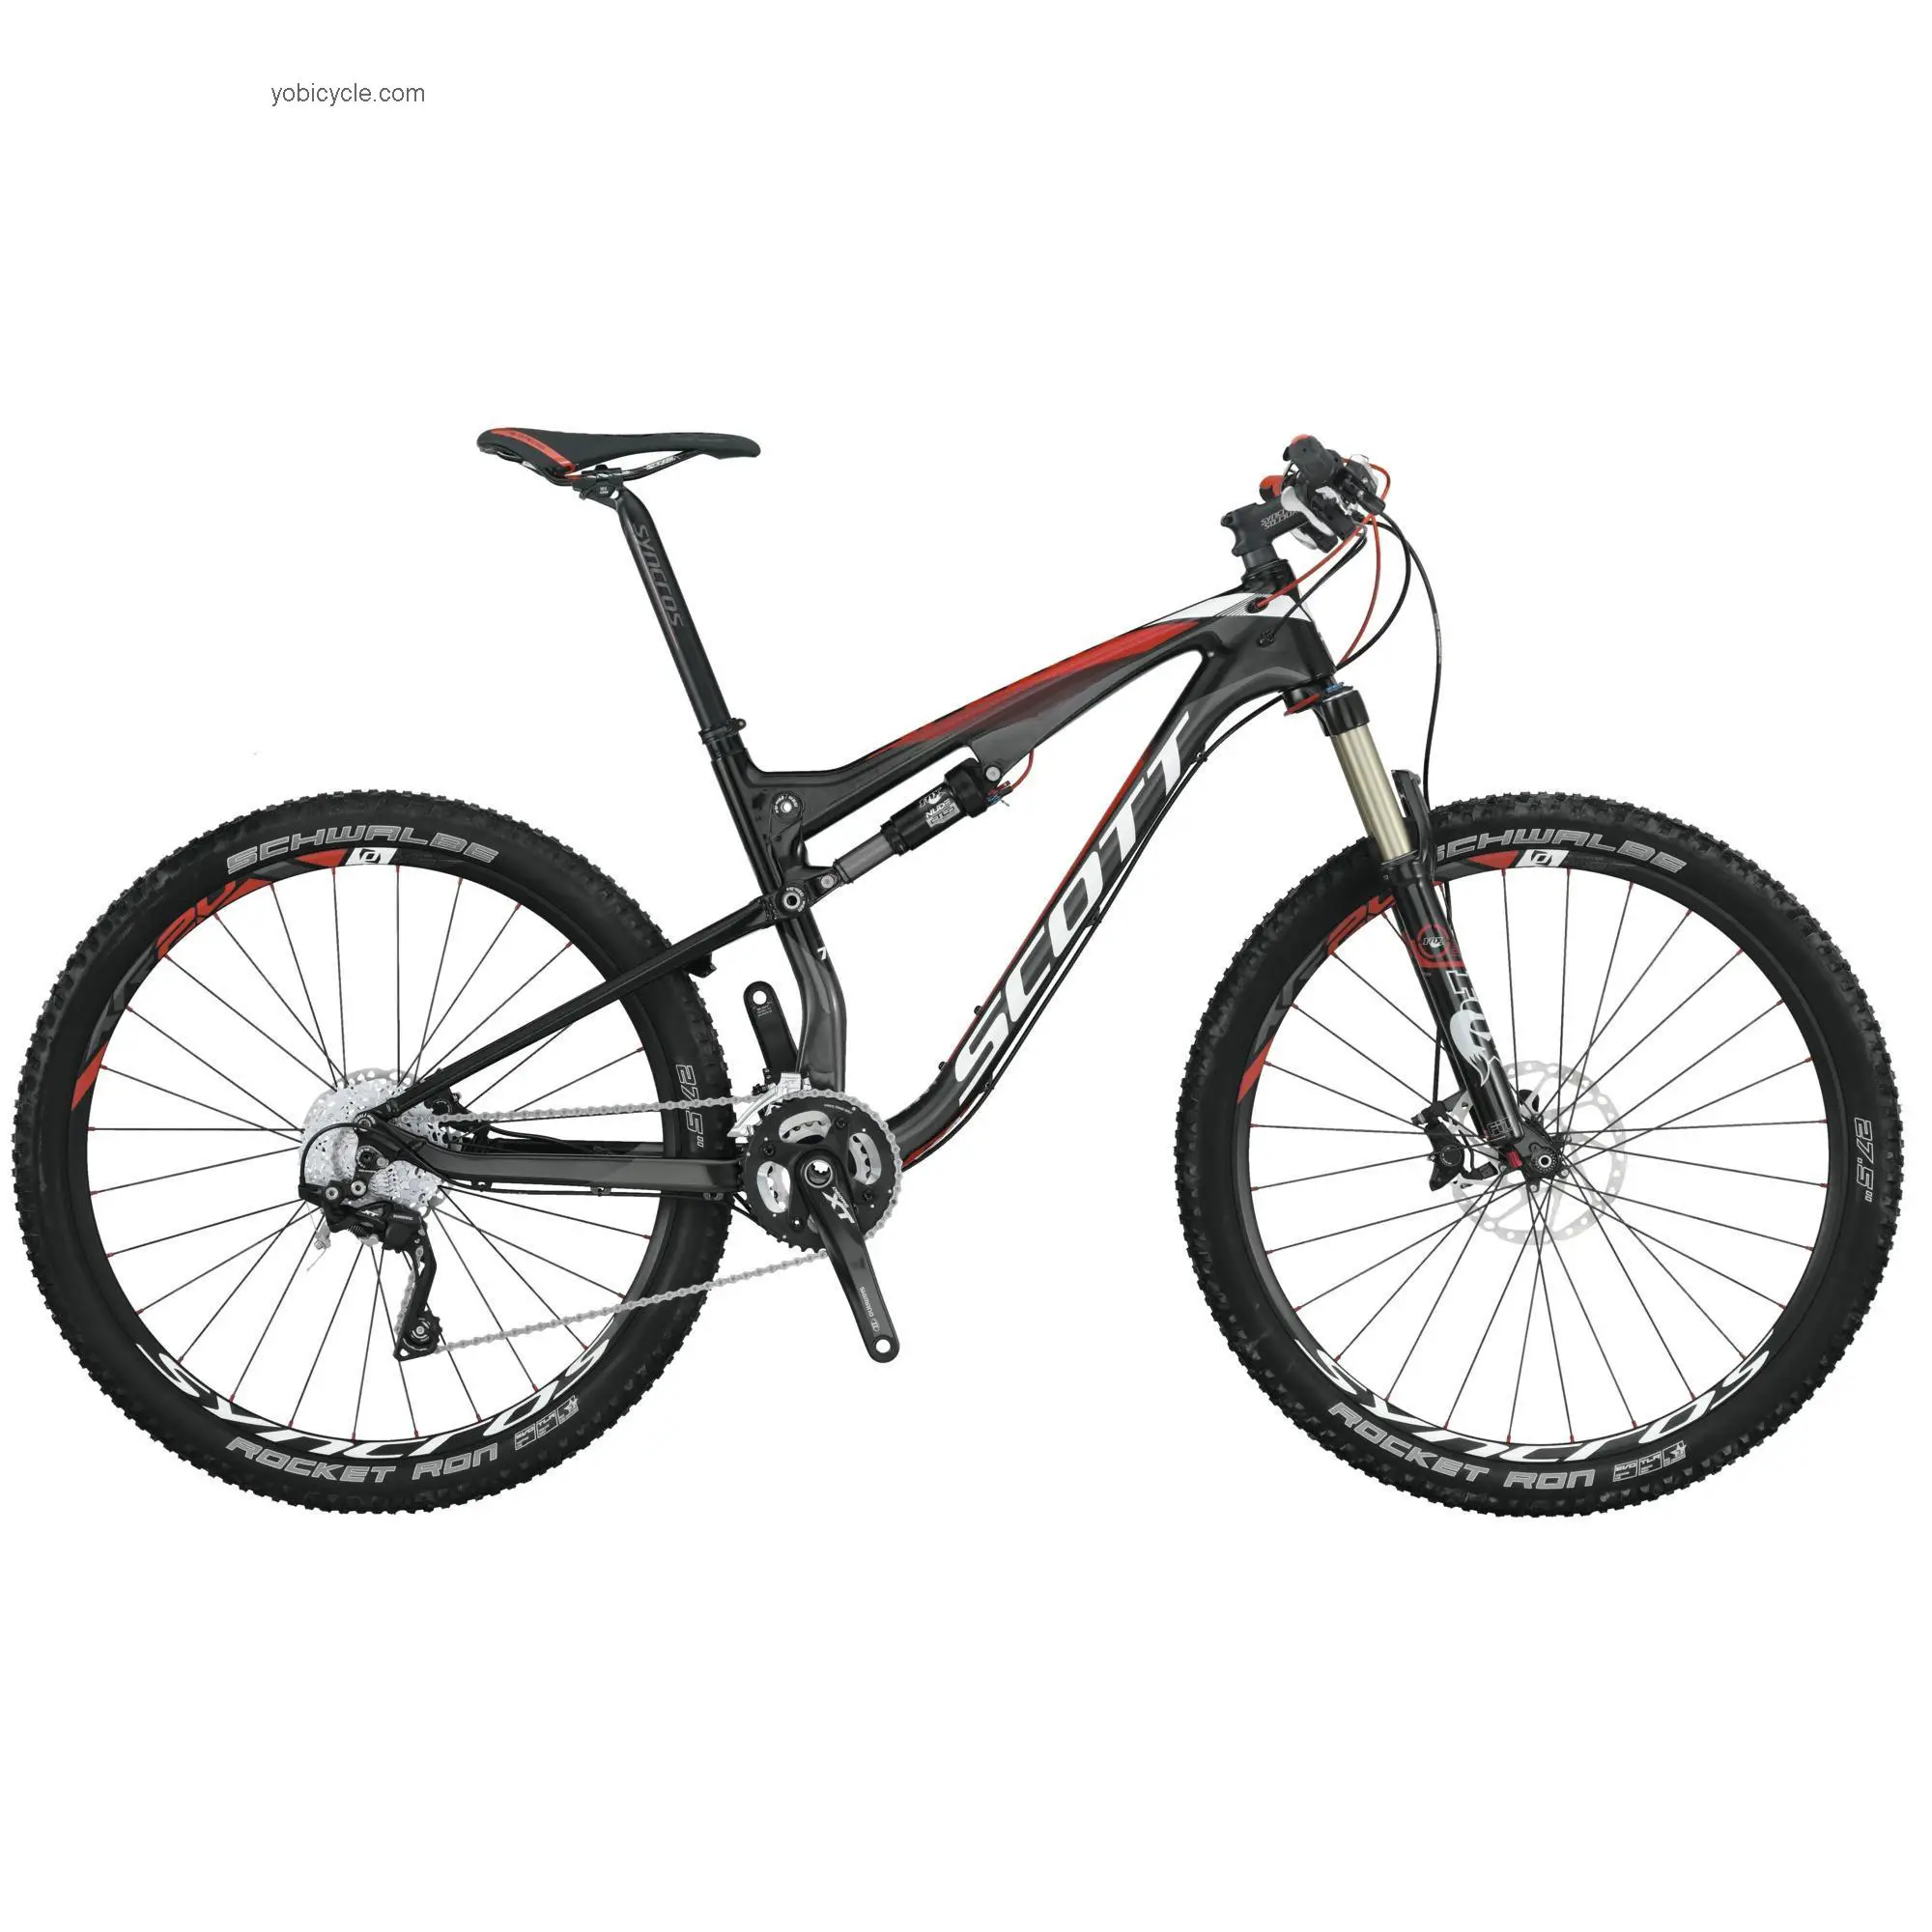 Scott Bike Spark 710 2014 comparison online with competitors